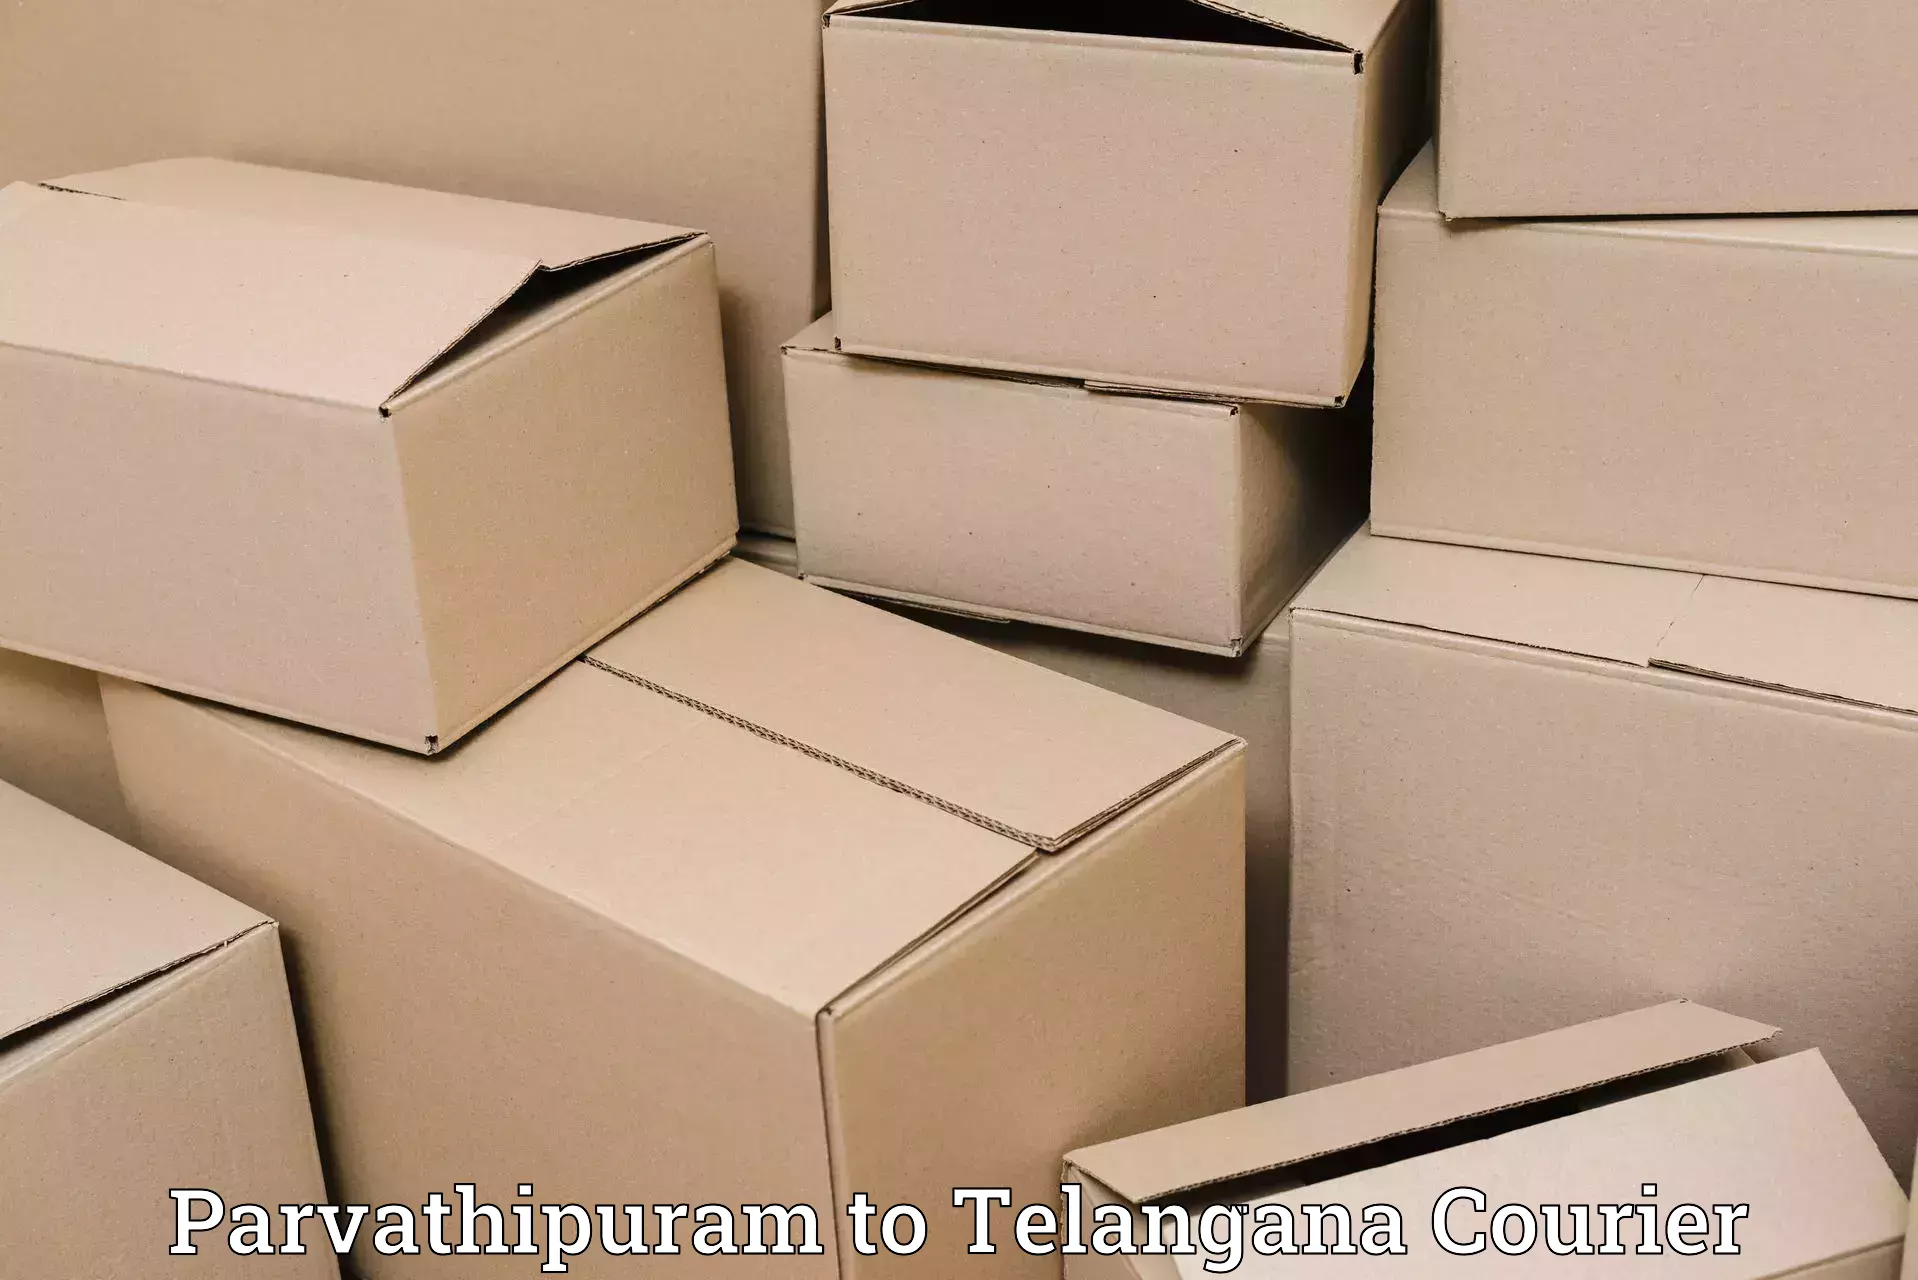 Express logistics providers Parvathipuram to Cheyyur